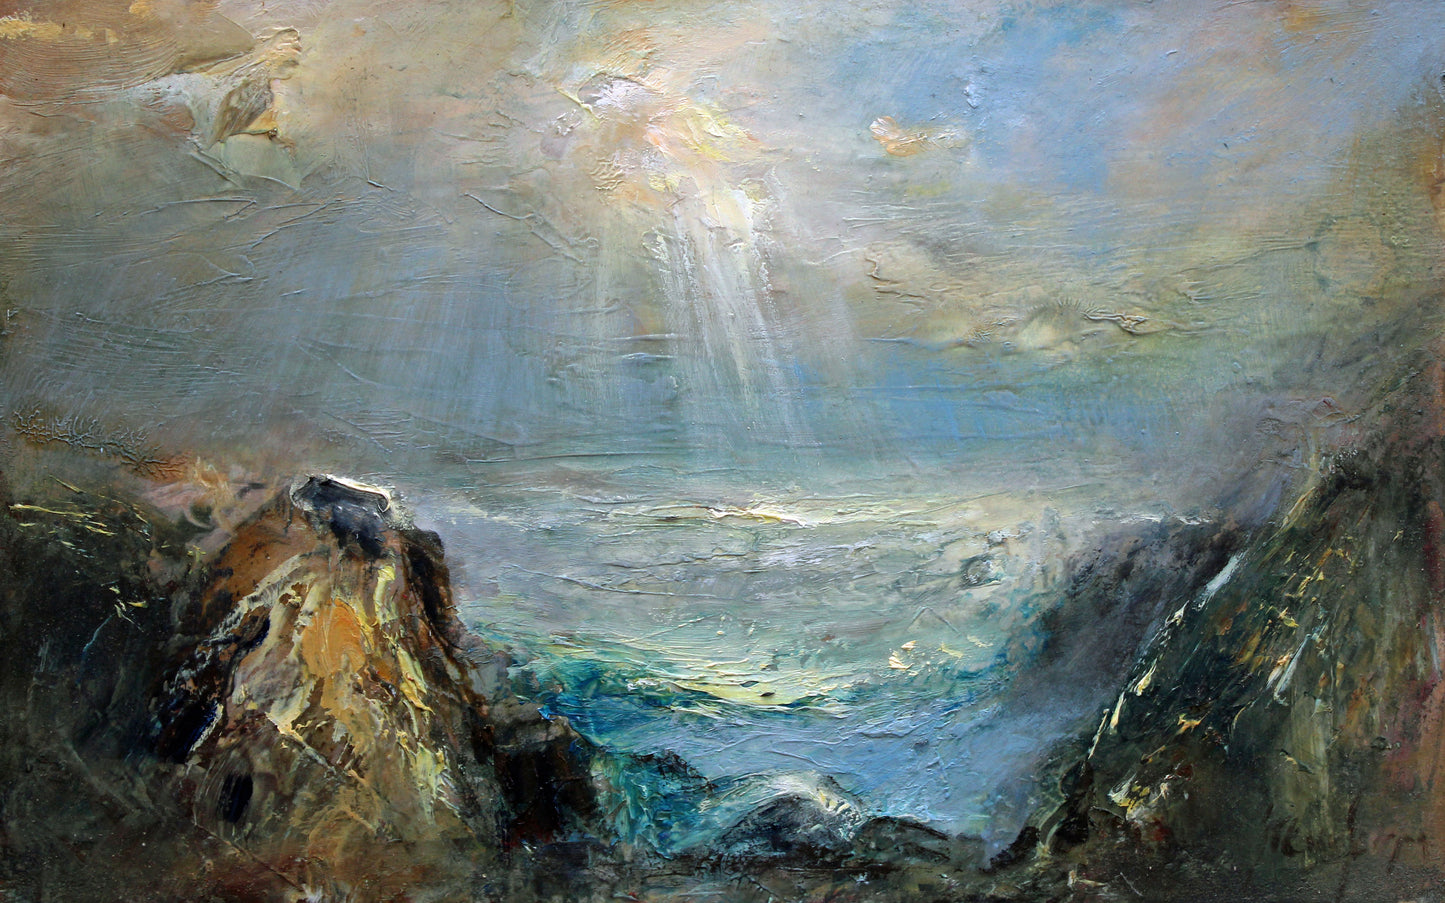 Oil Painting: Storm Under Way - for Debra Davidson